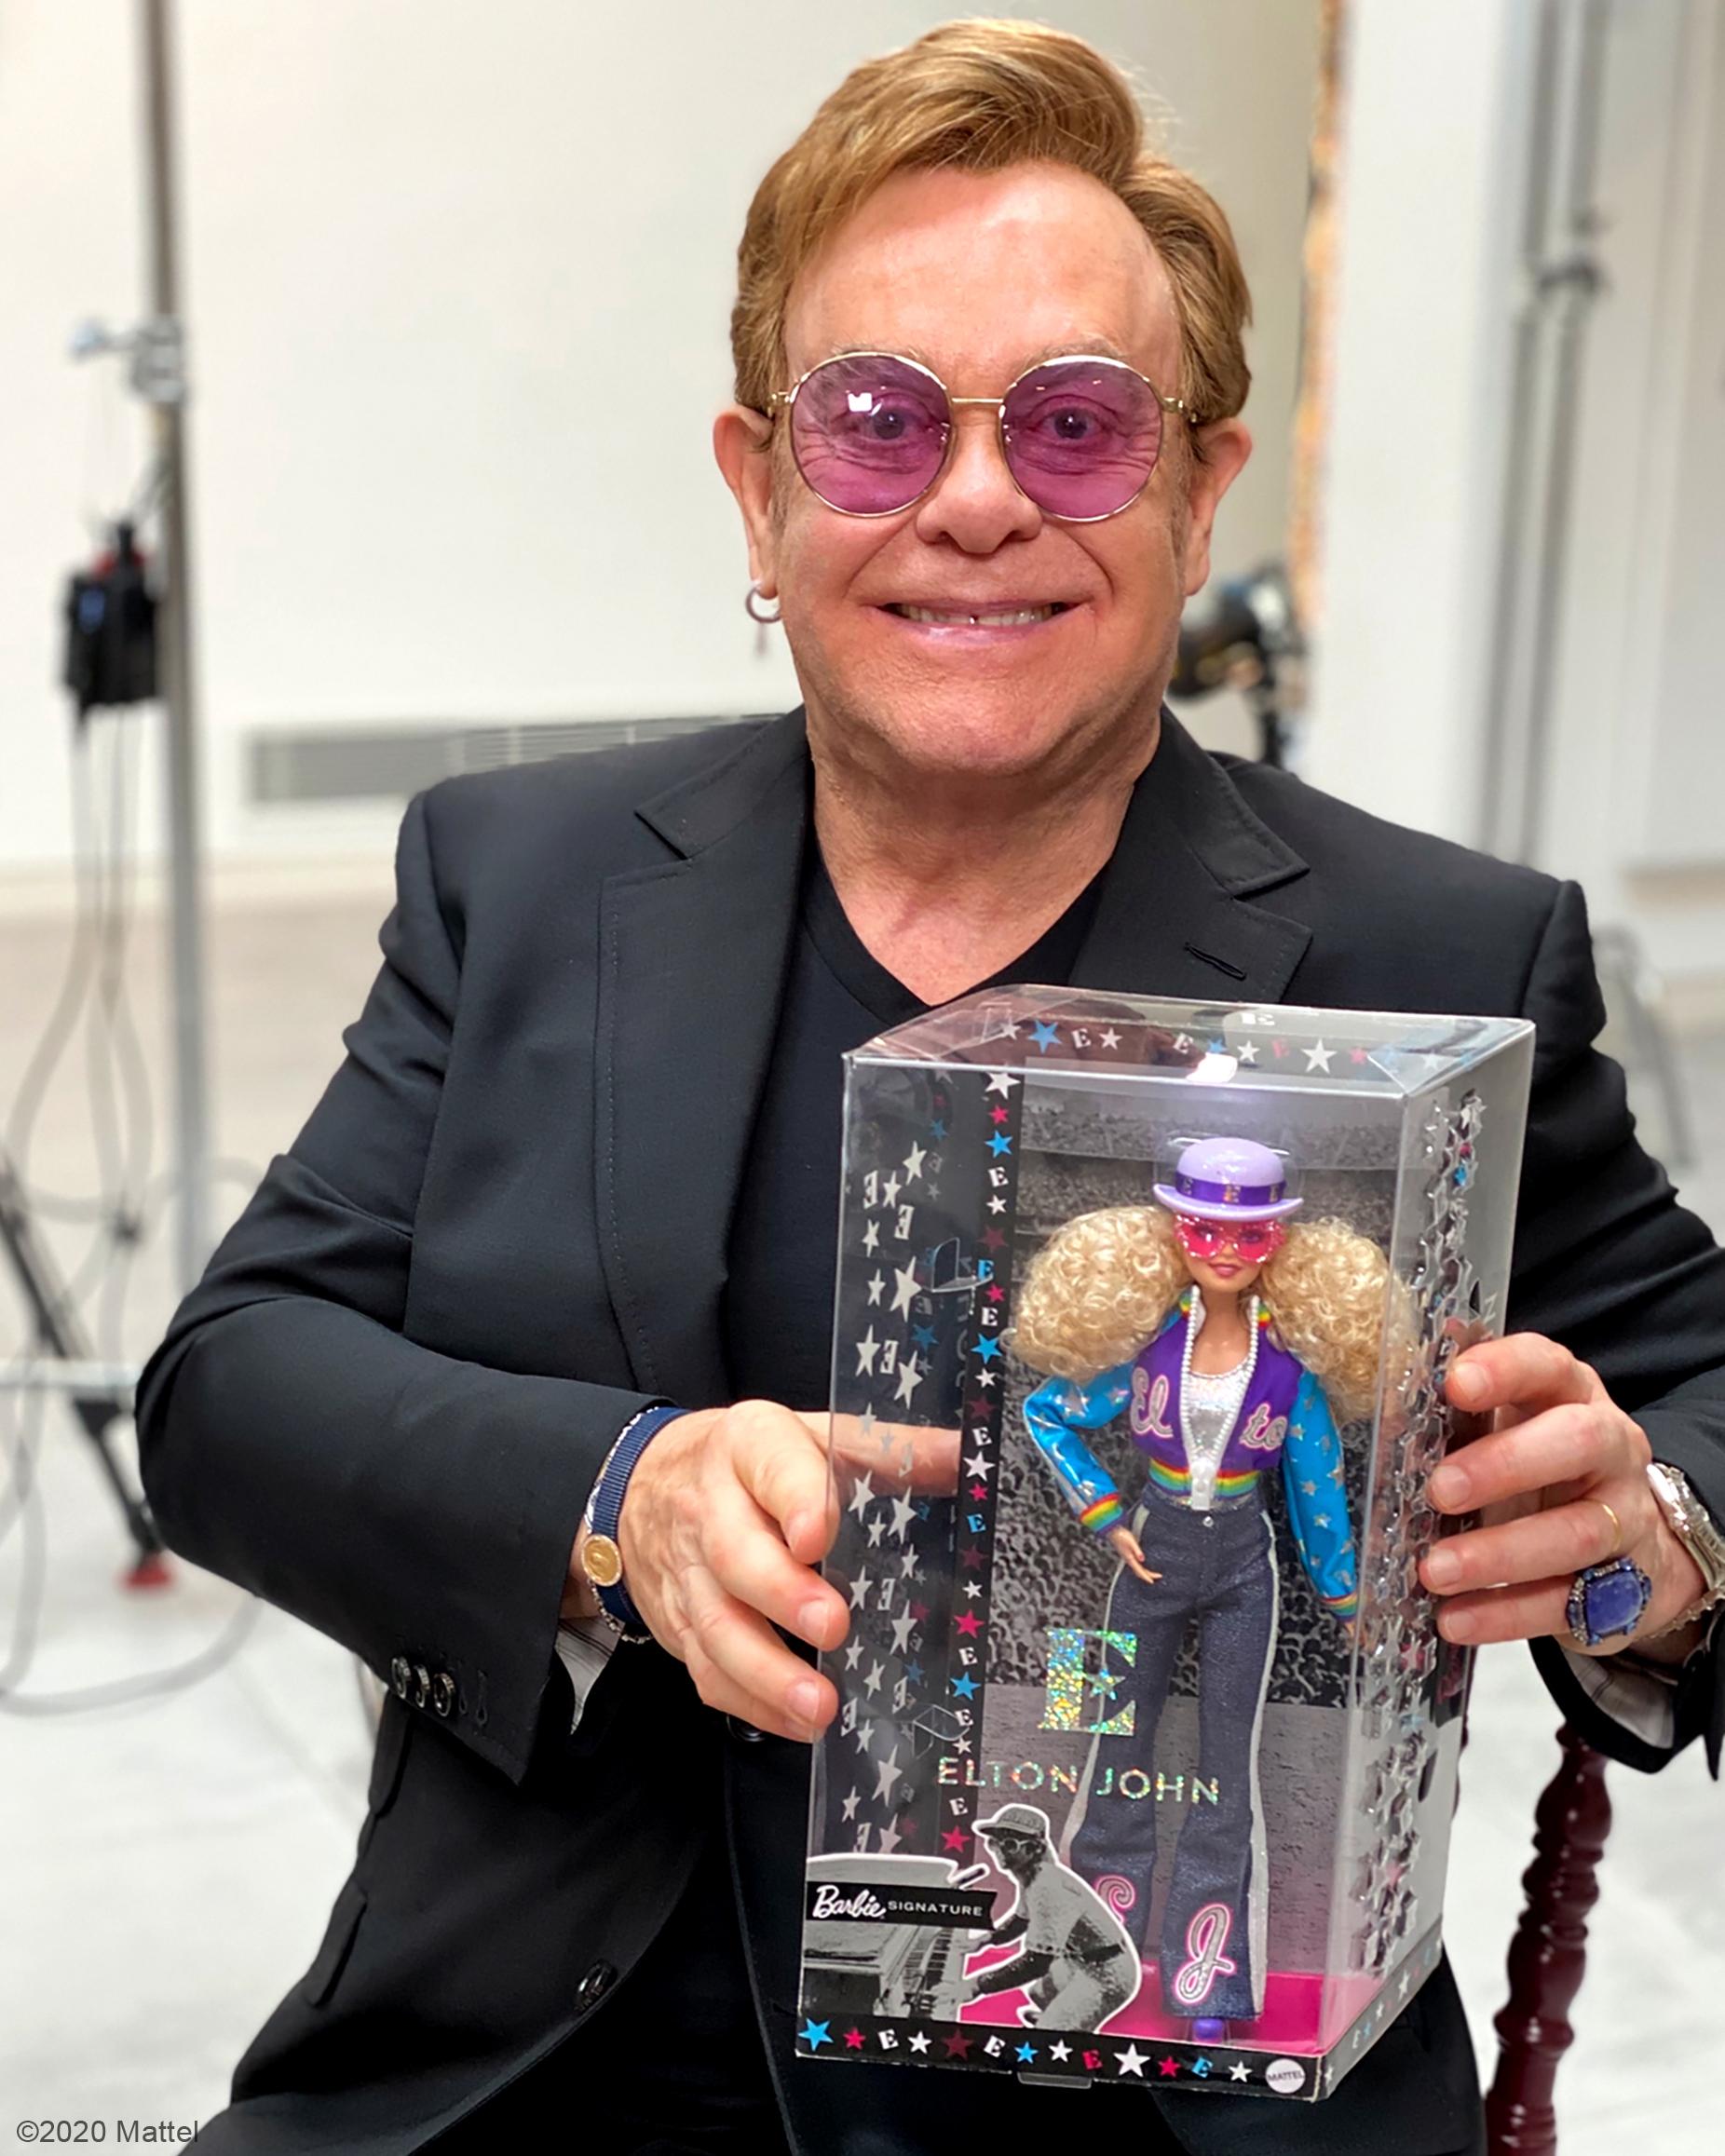 Elton John gets a Barbie doll